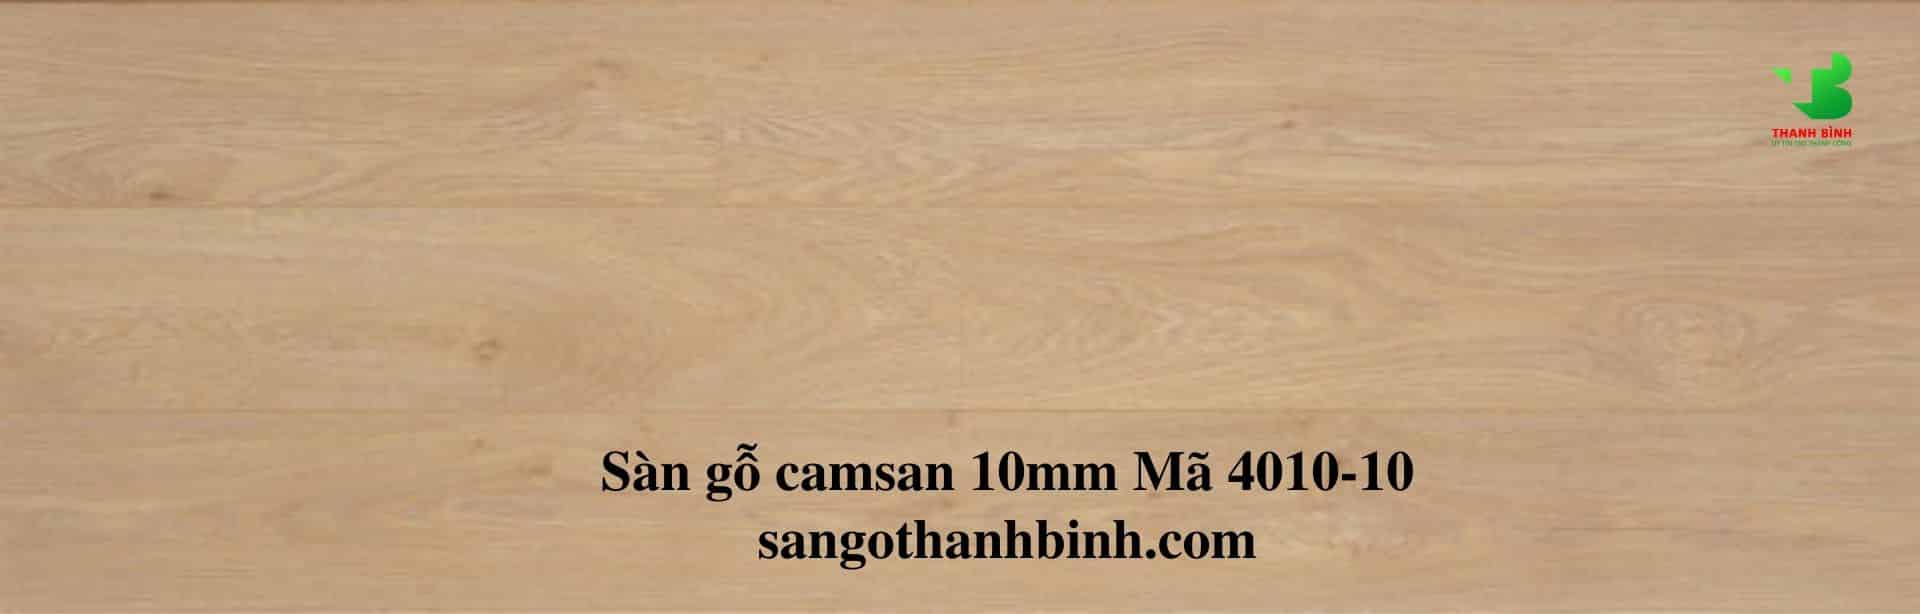 Camsan 10mm Ma 40102